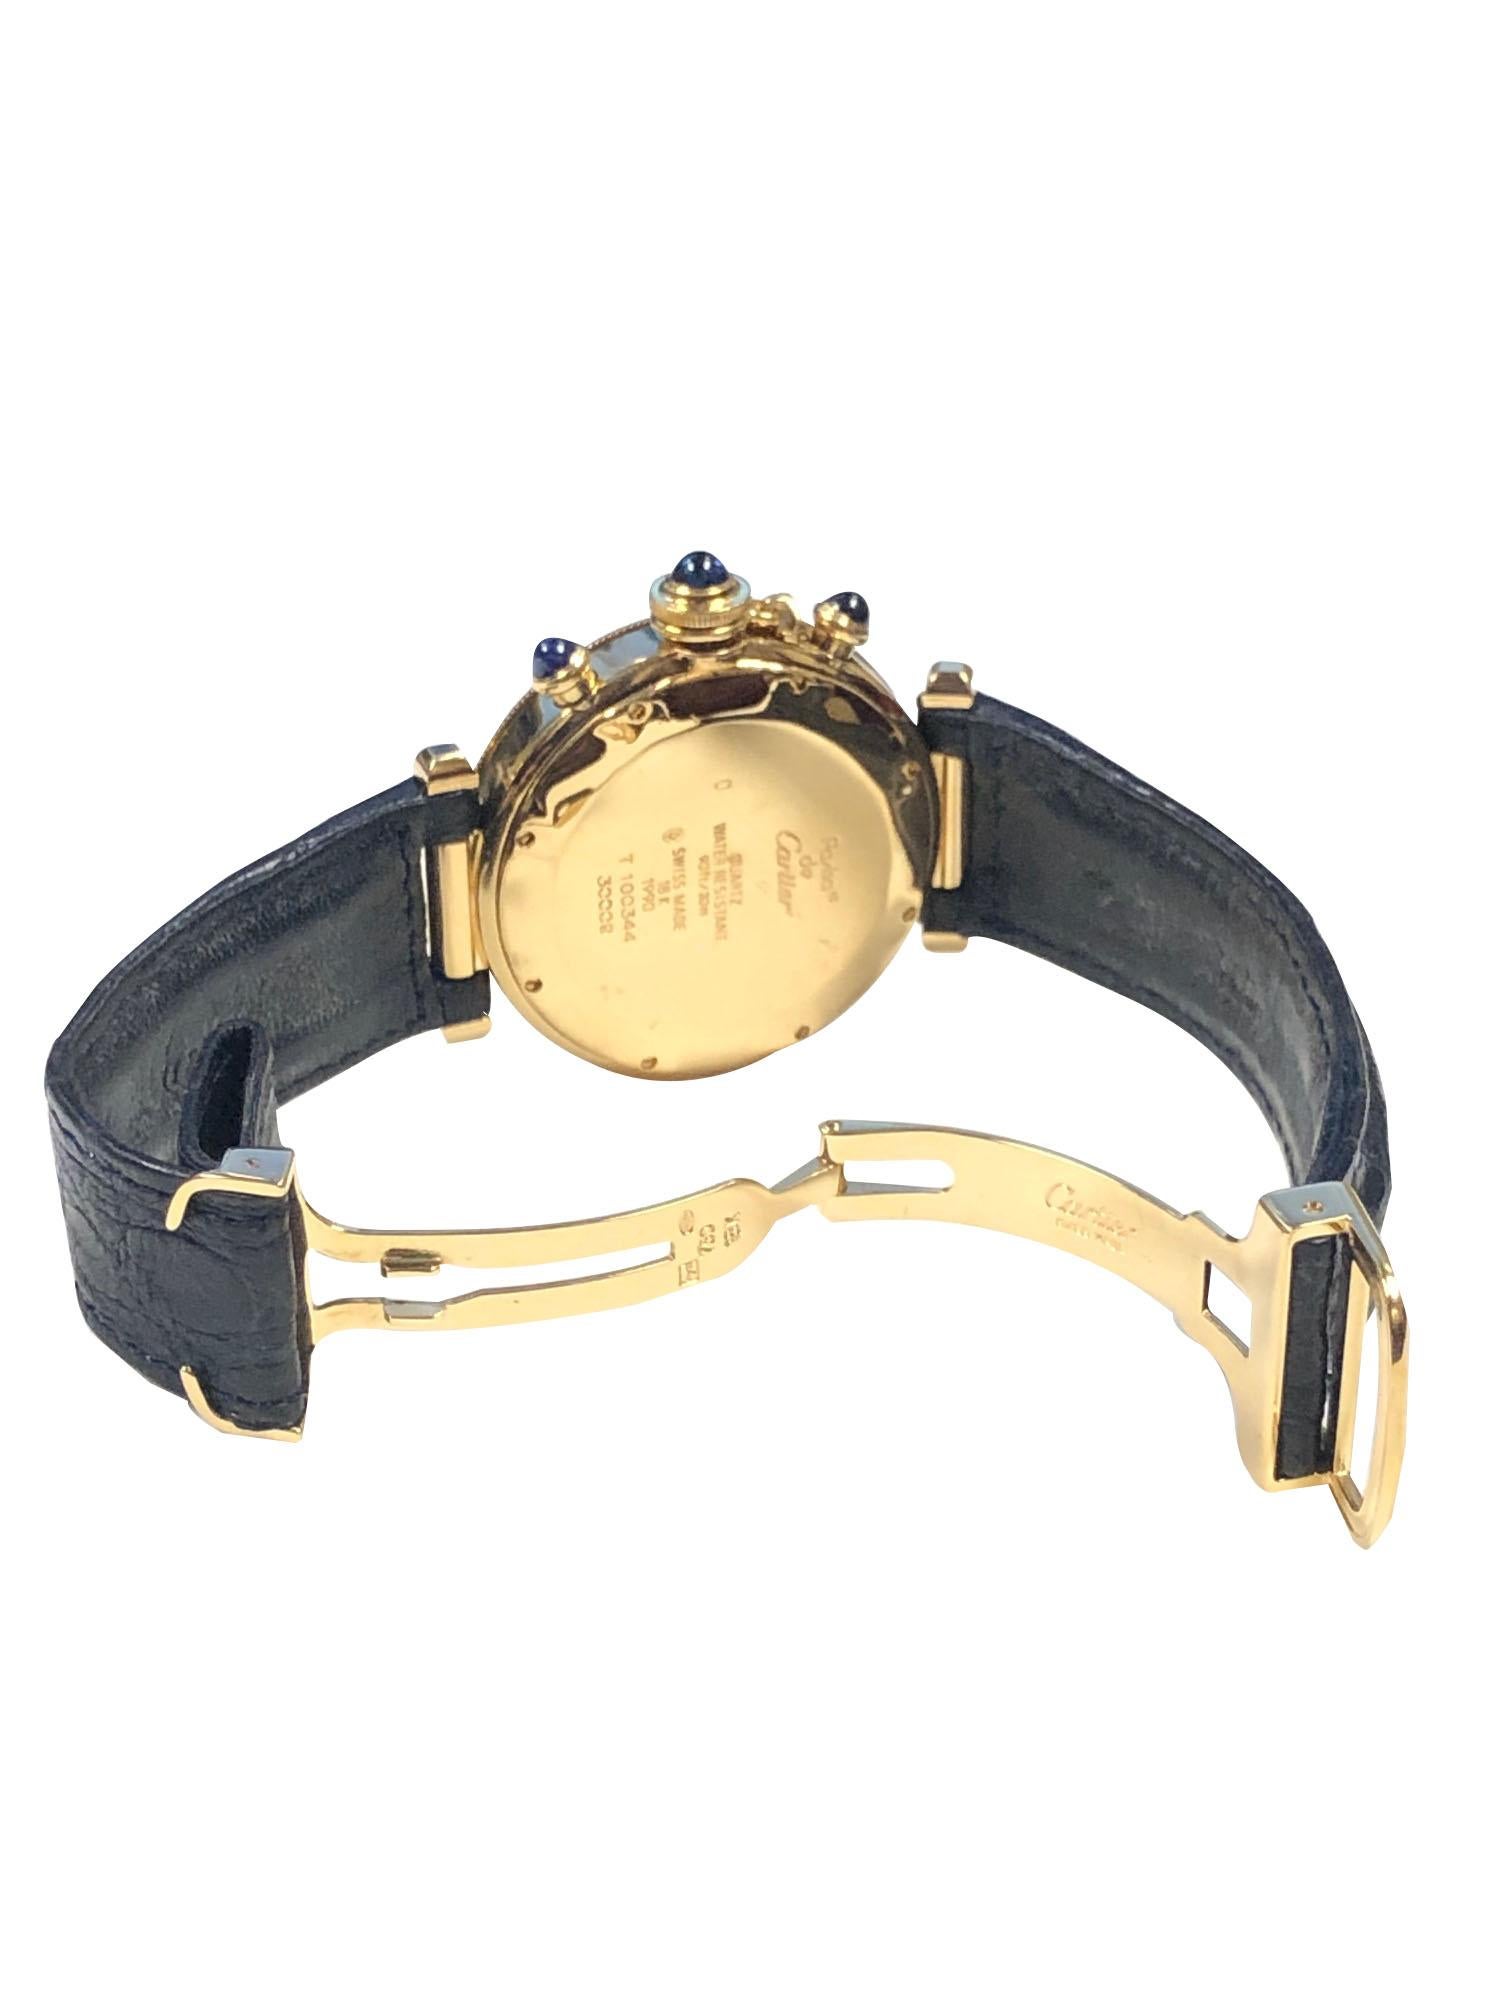 Cartier Pash De Cartier Yellow Gold Chronograph quartz Wristwatch 1